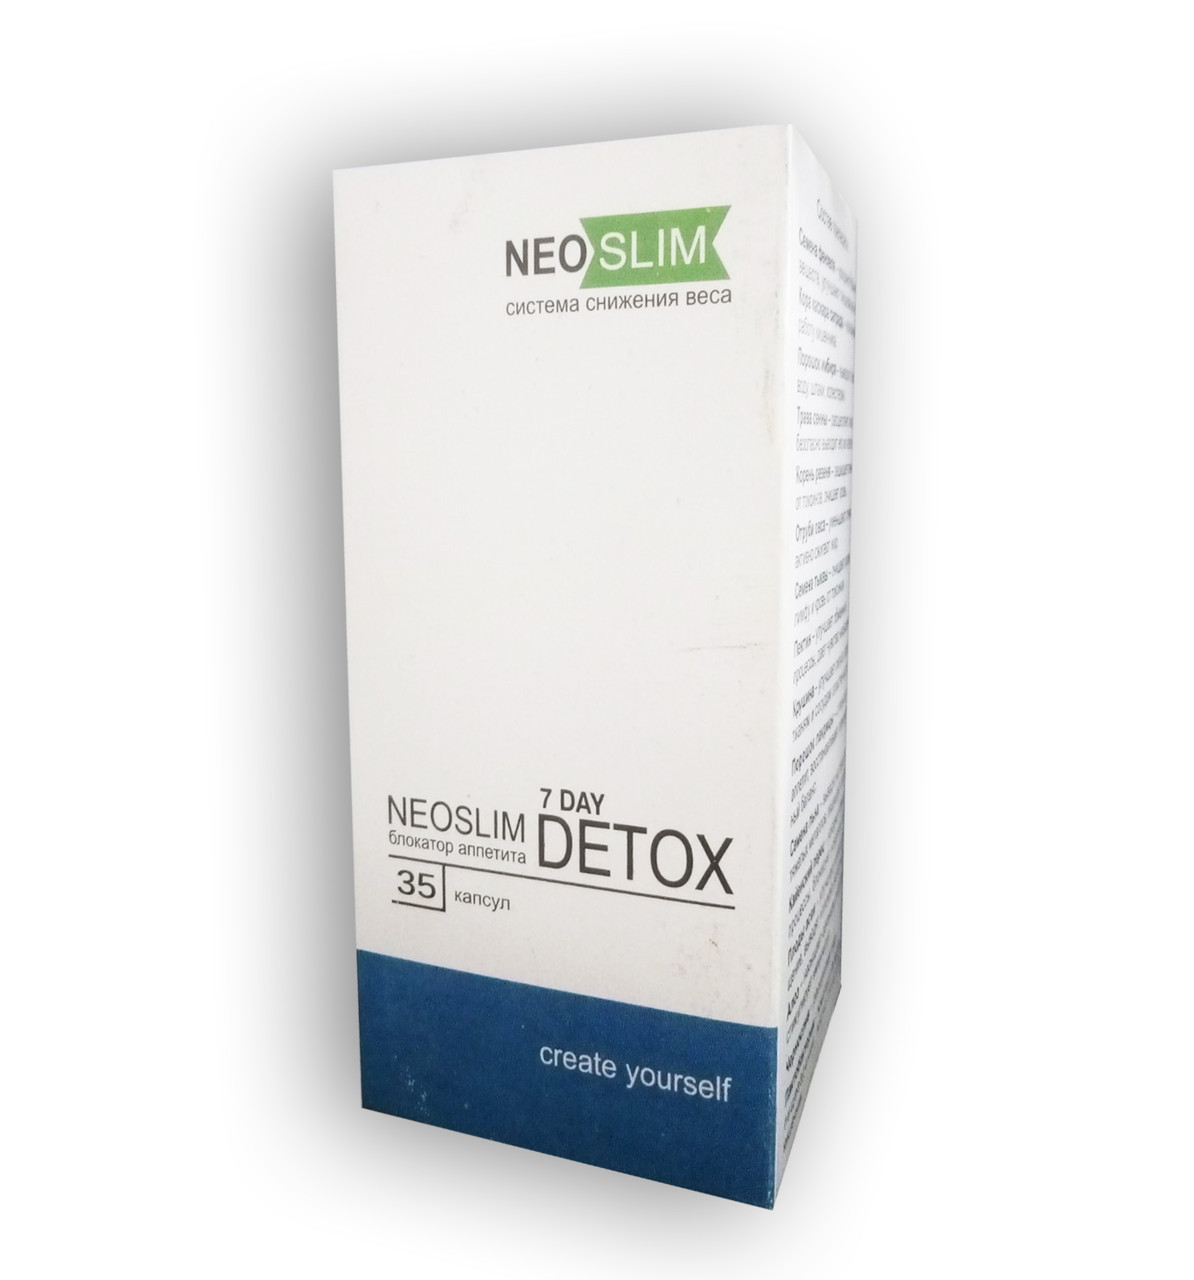 

Neo Slim 7 Day Detox - Комплекс для снижения веса (Нео Слим Севен Дей Детокс)